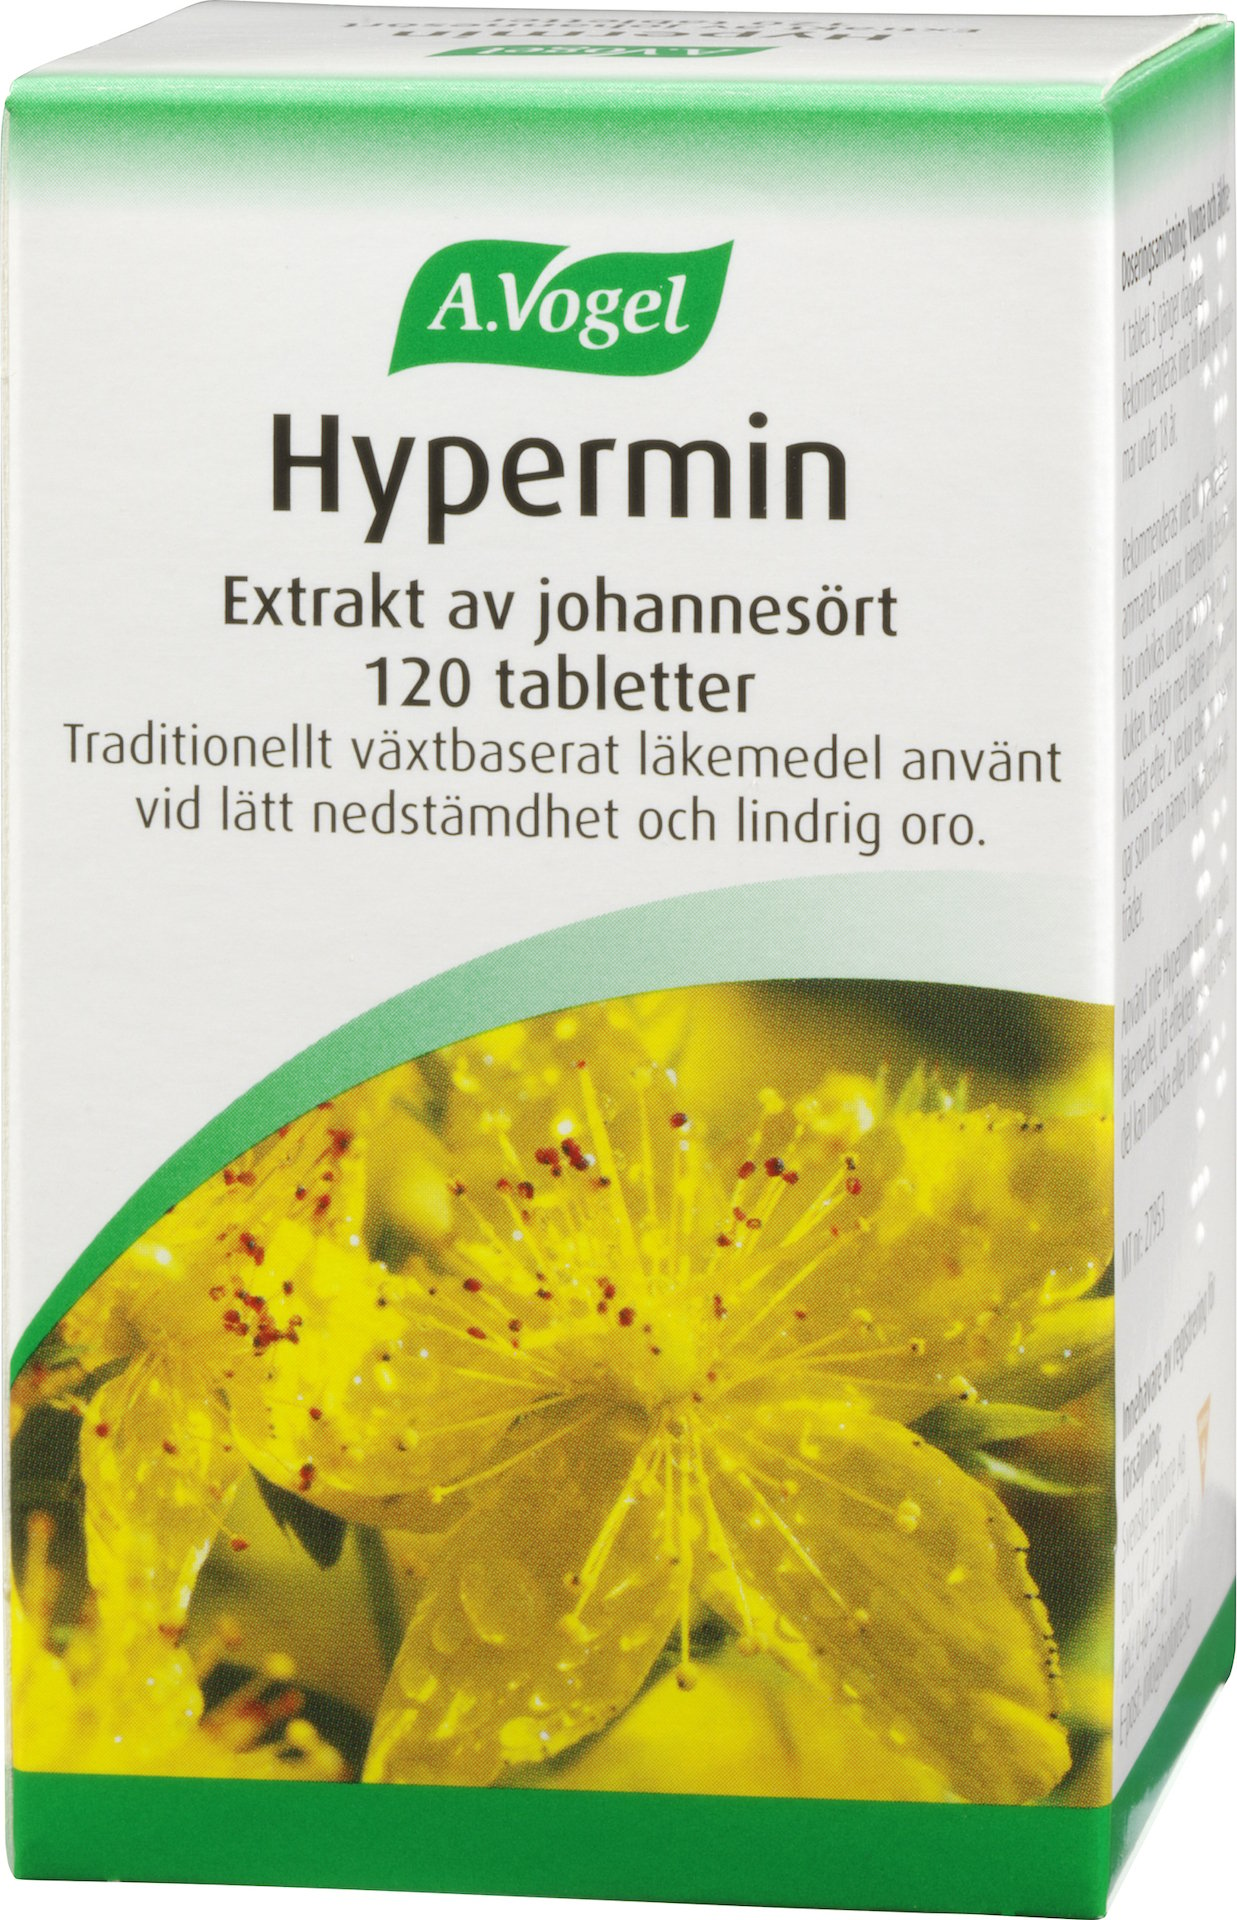 A.Vogel Hypermin 120 tabletter